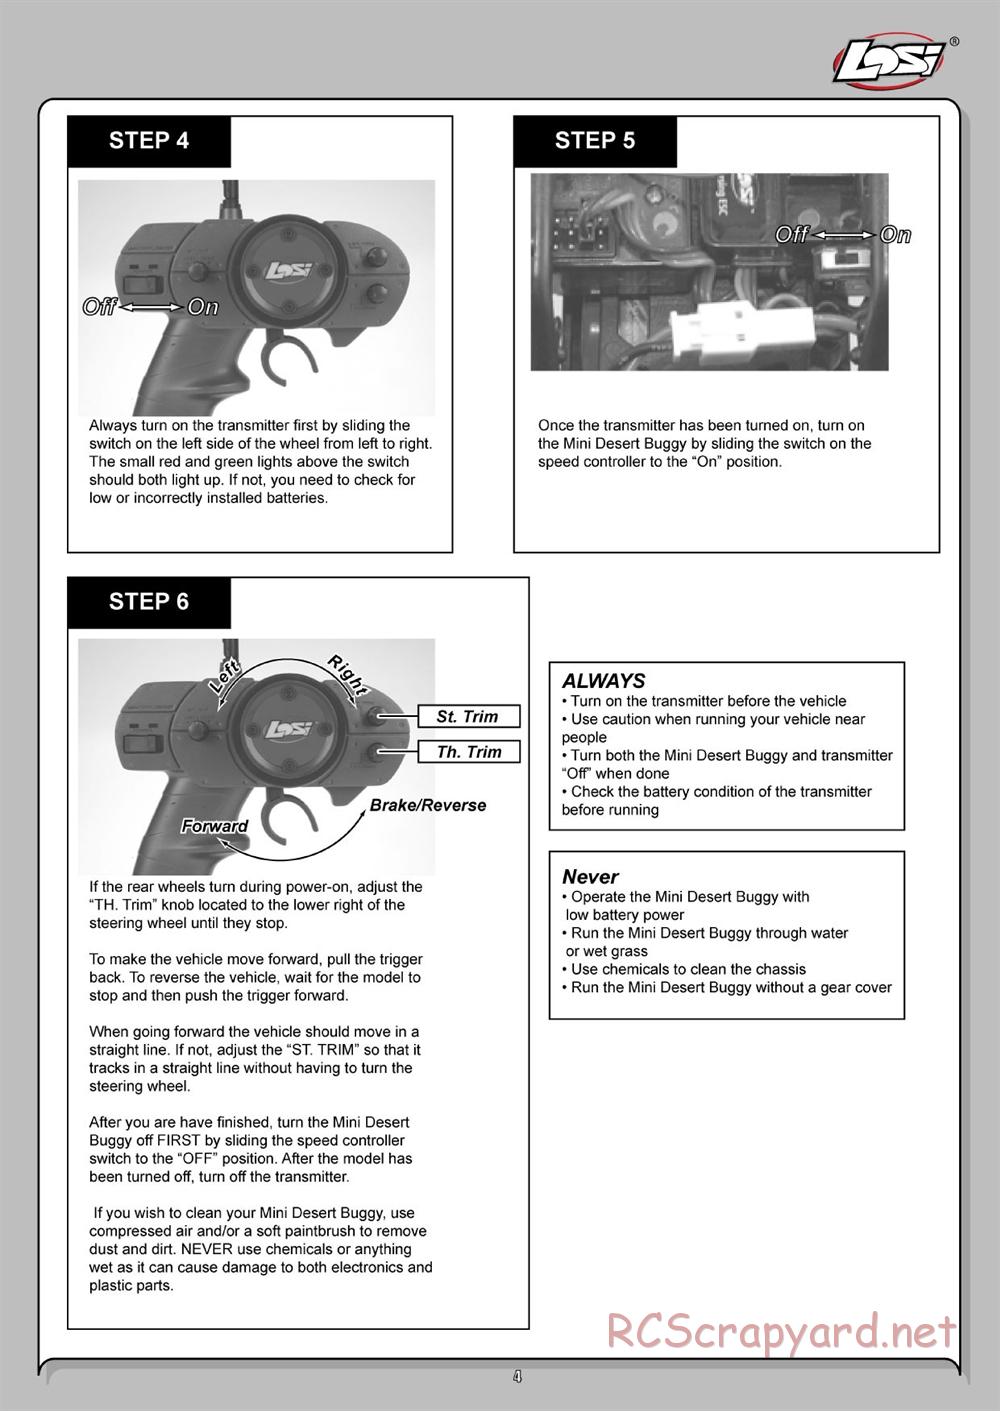 Team Losi - Mini Desert Buggy - Manual - Page 4